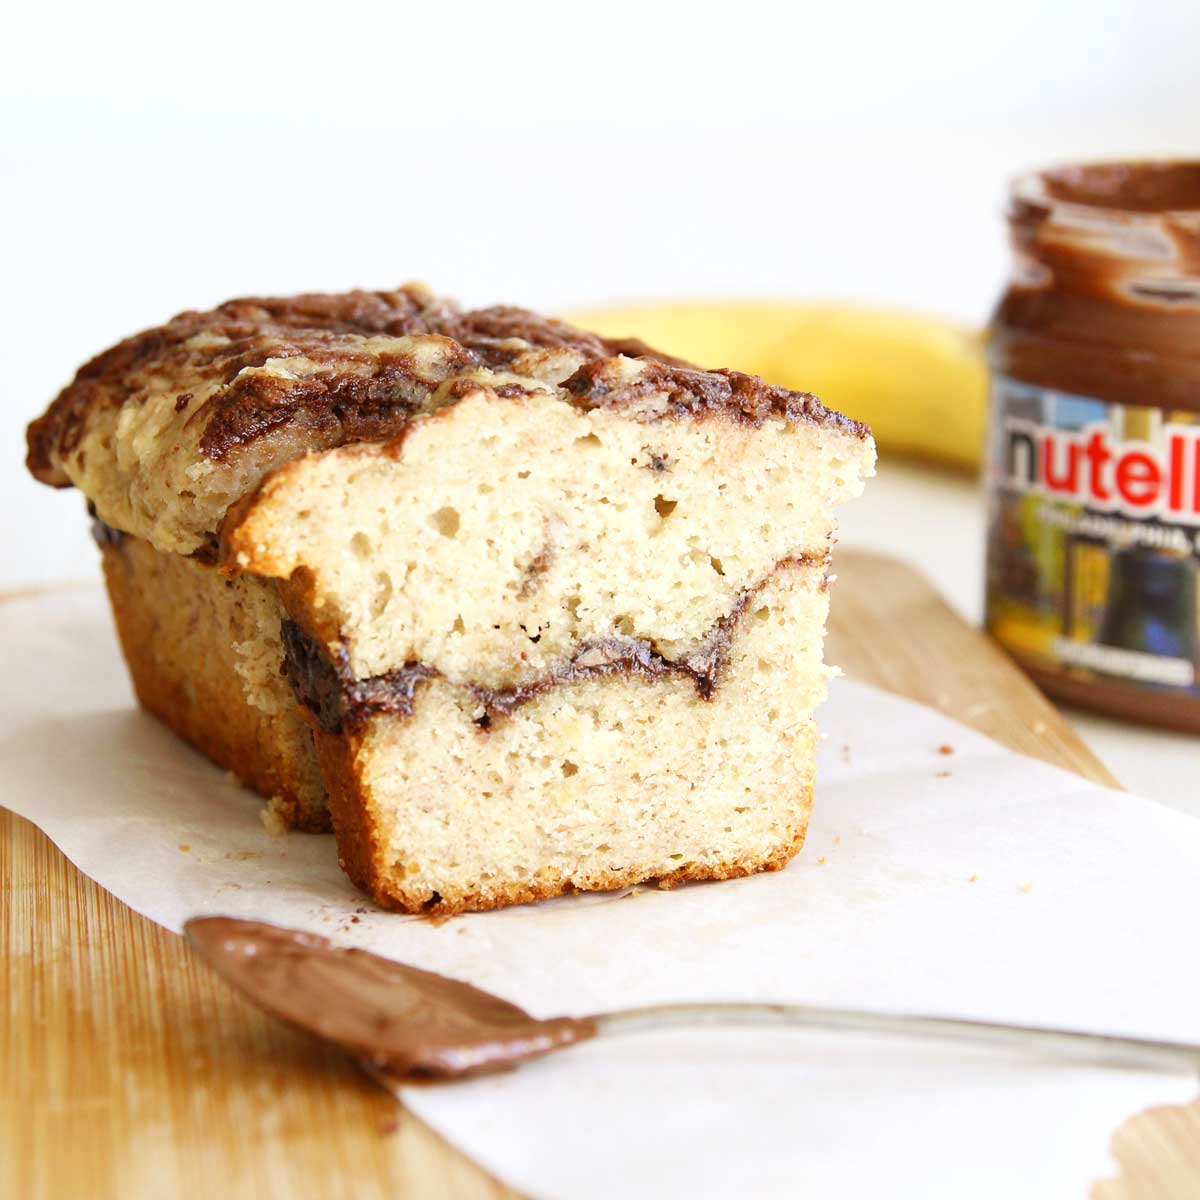 Super Moist Nutella Stuffed Banana Bread with Olive Oil & Almond Flour - Flourless Banana Roll Cake